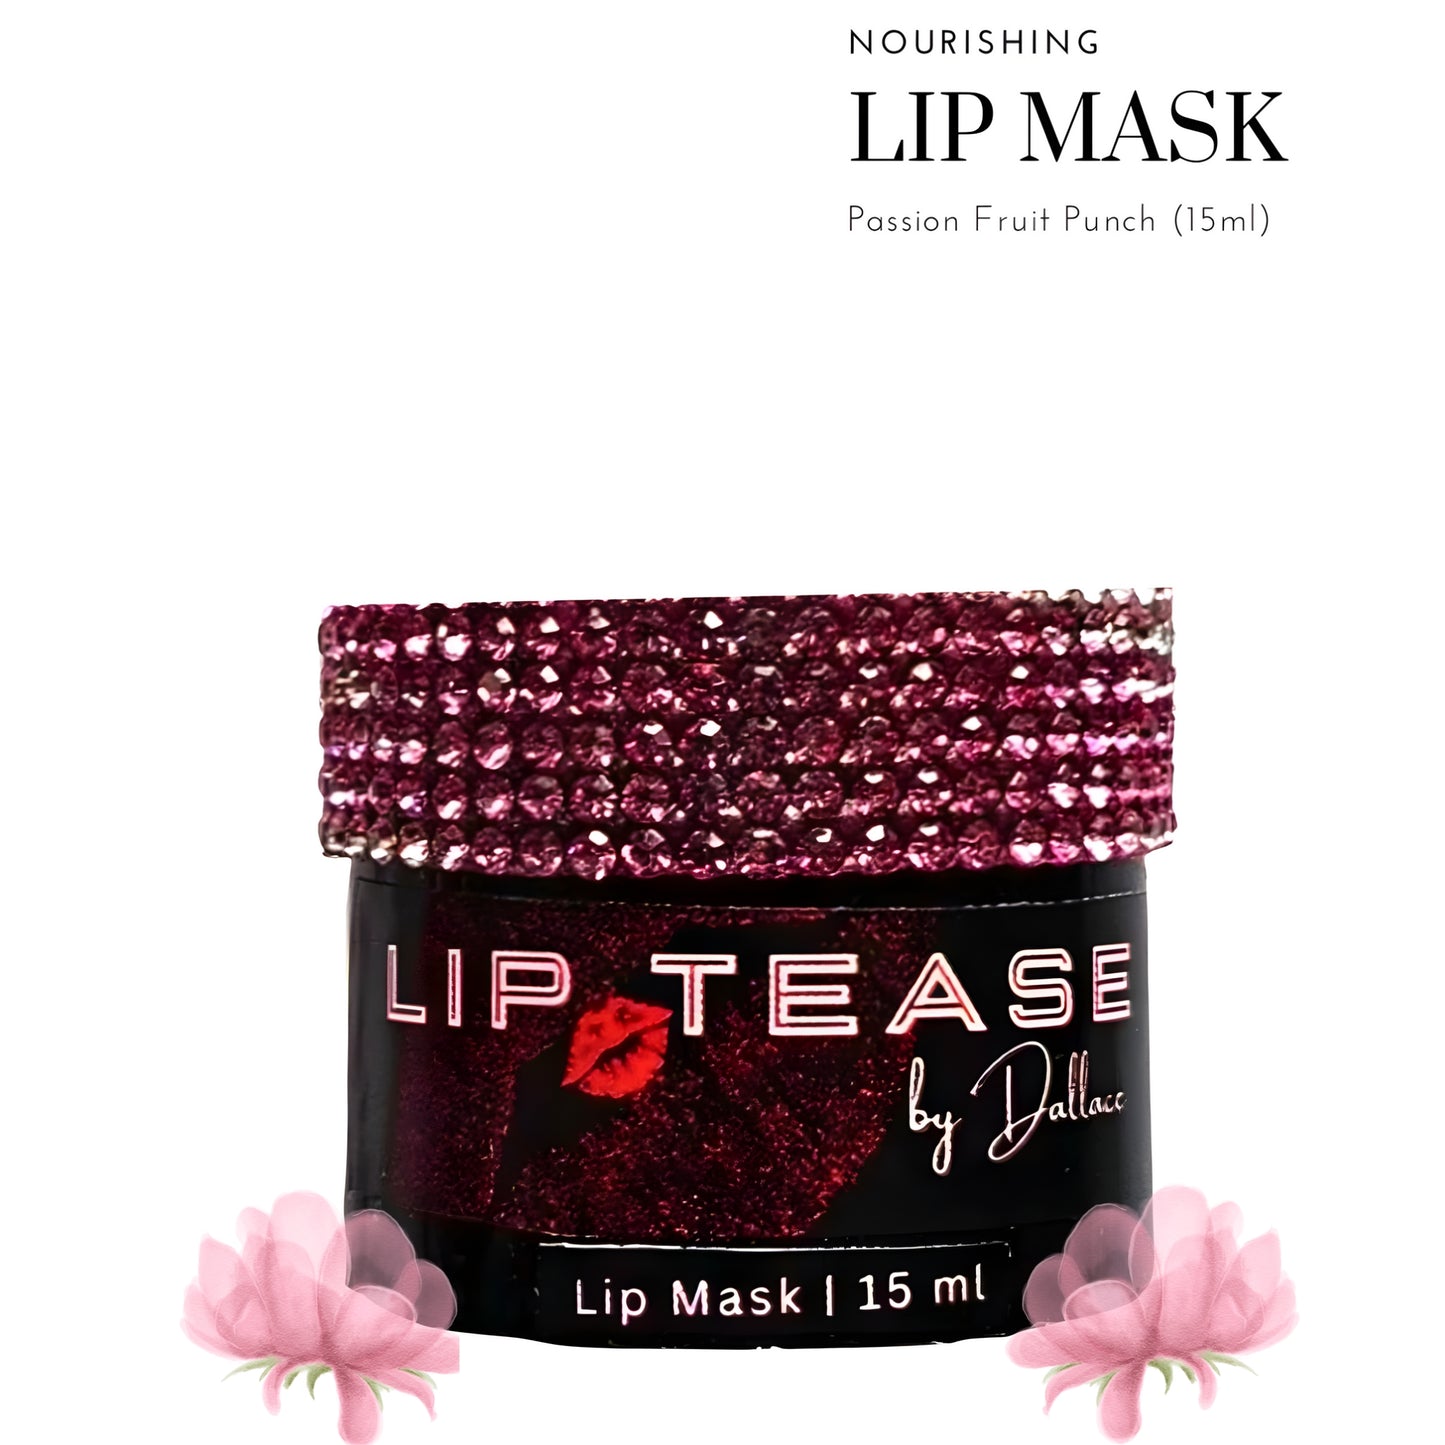 Nourishing Lip Mask Lip Mask Lip Tease by Dallace  Fruit Punch Lip Mask (black bling top 15ml) Overnight Sleeping Mask 